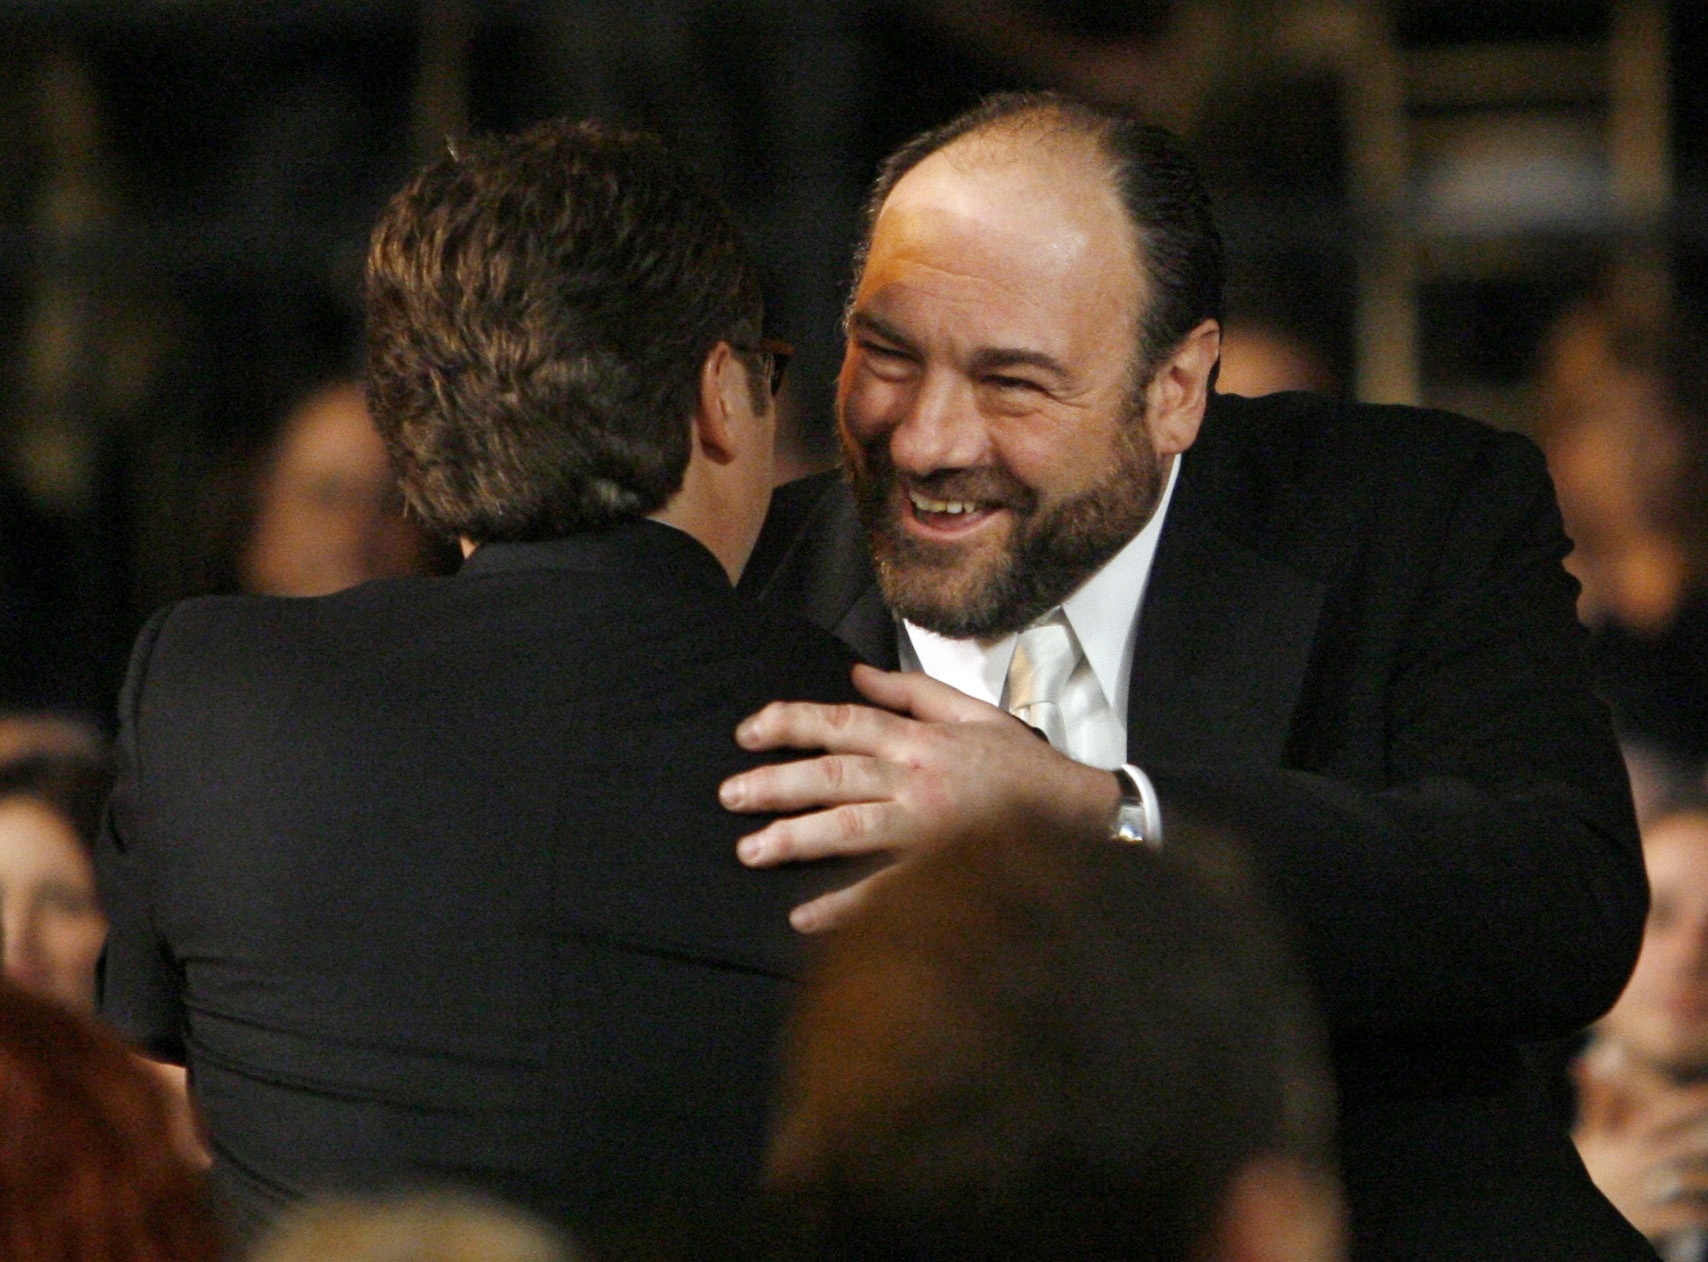 'Sopranos' star James Gandolfini dead at 51: reports